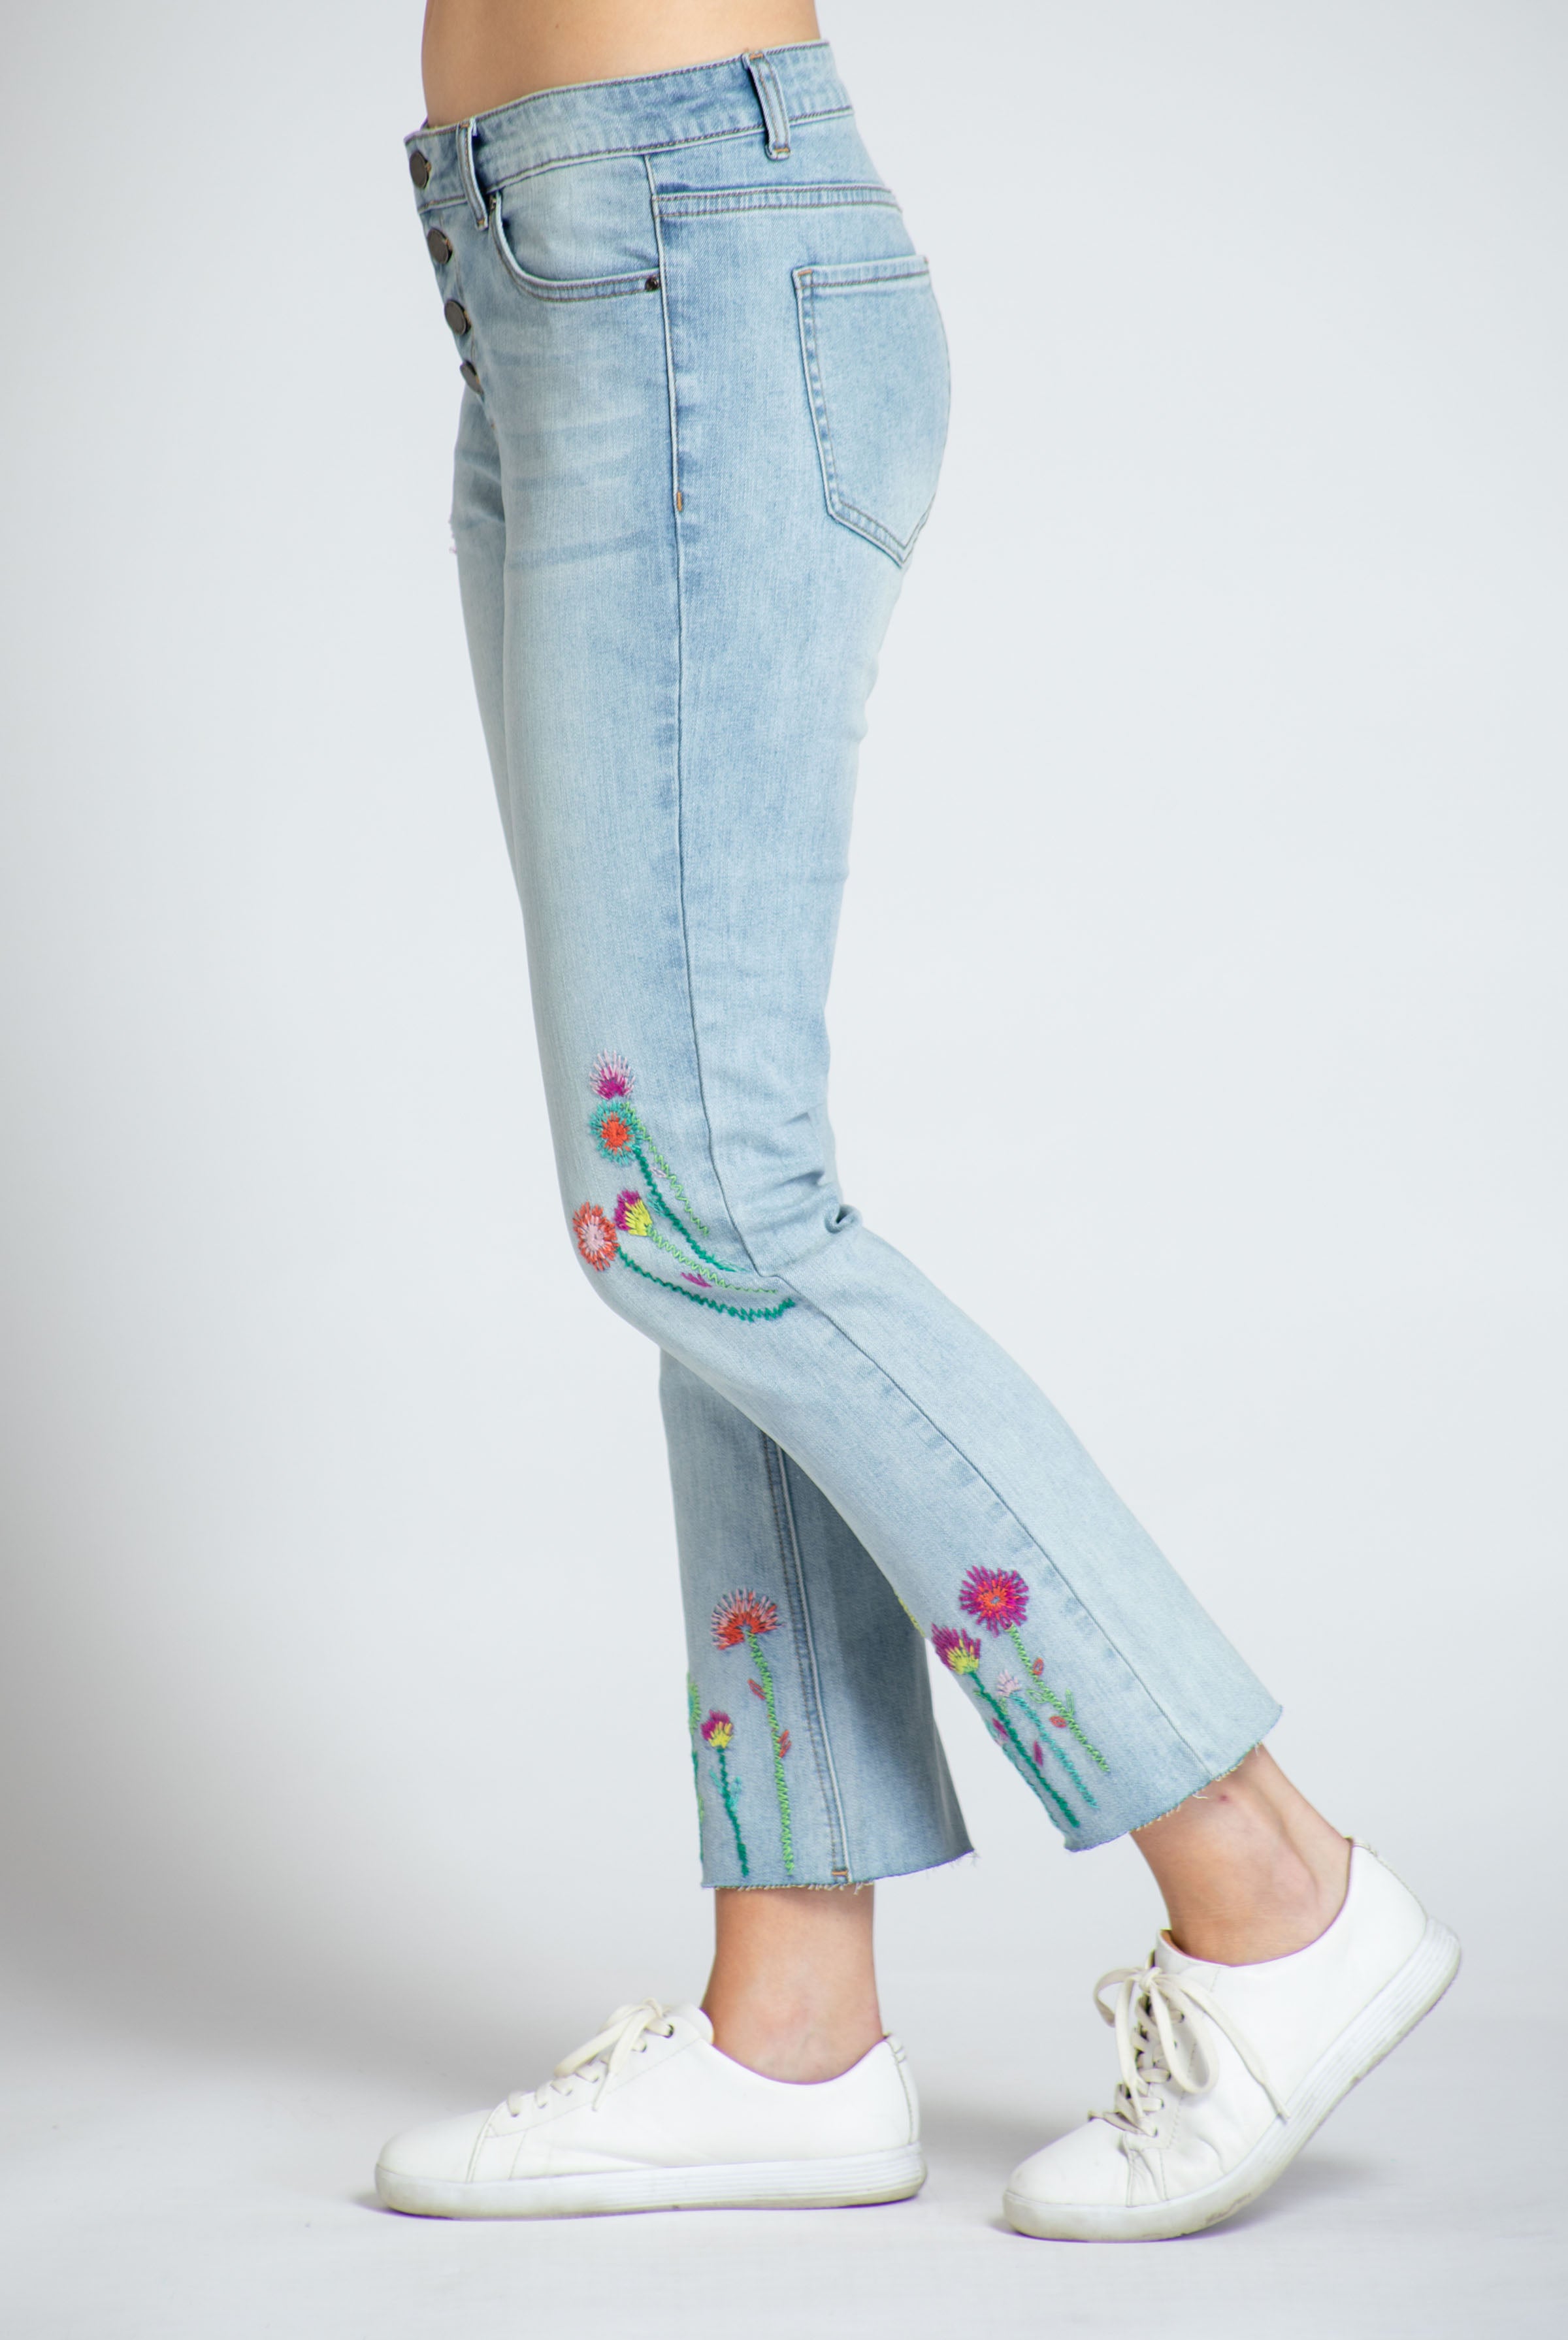  Floral Embroidered Straight Leg Jean - Medium Indigo